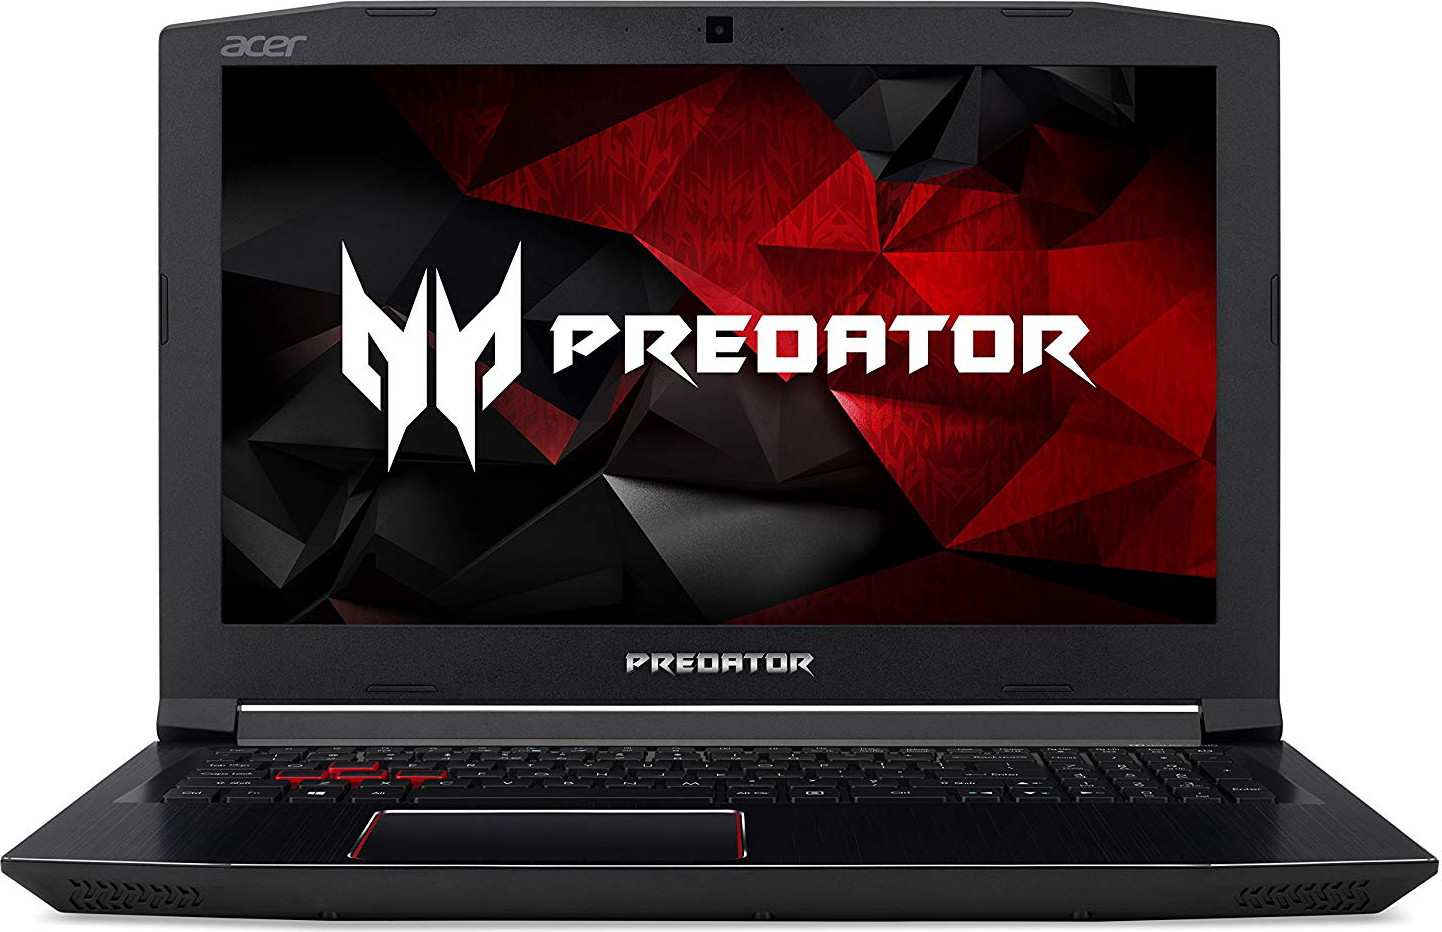 Acer Predator Helios 300 Gaming Laptop, 15.6" Full HD IPS, Intel i7-7700HQ CPU, 16GB DDR4 RAM, 256GB SSD, GeForce GTX 1060-6GB, VR Ready, Red Backlit KB, Metal Chassis, Windows 10 64-bit, G3-571-77QK